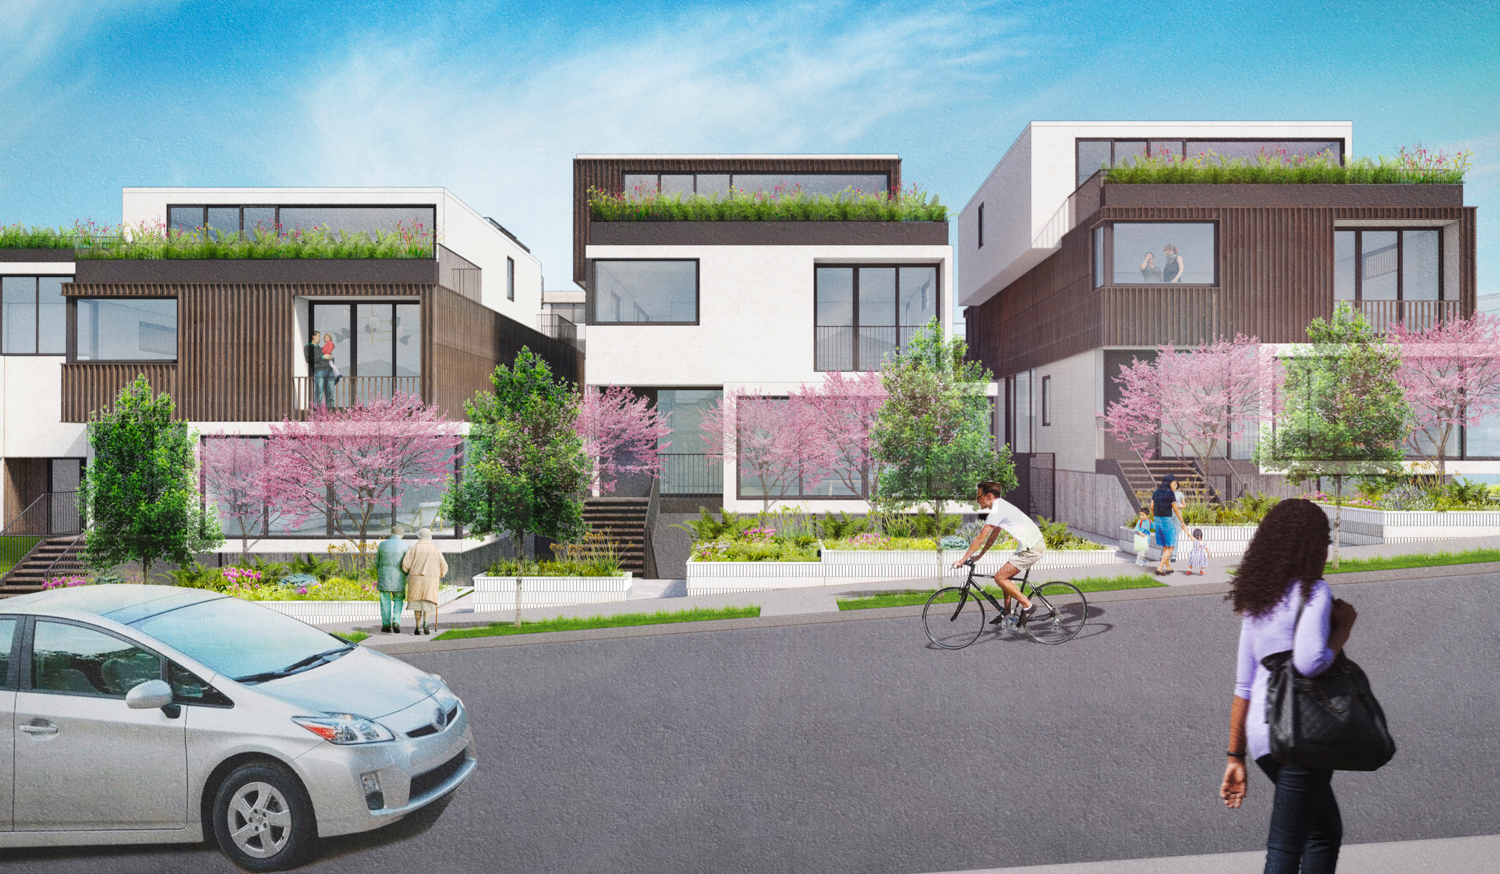 3333 California street Laurel Townhomes, rendering via Planning Application